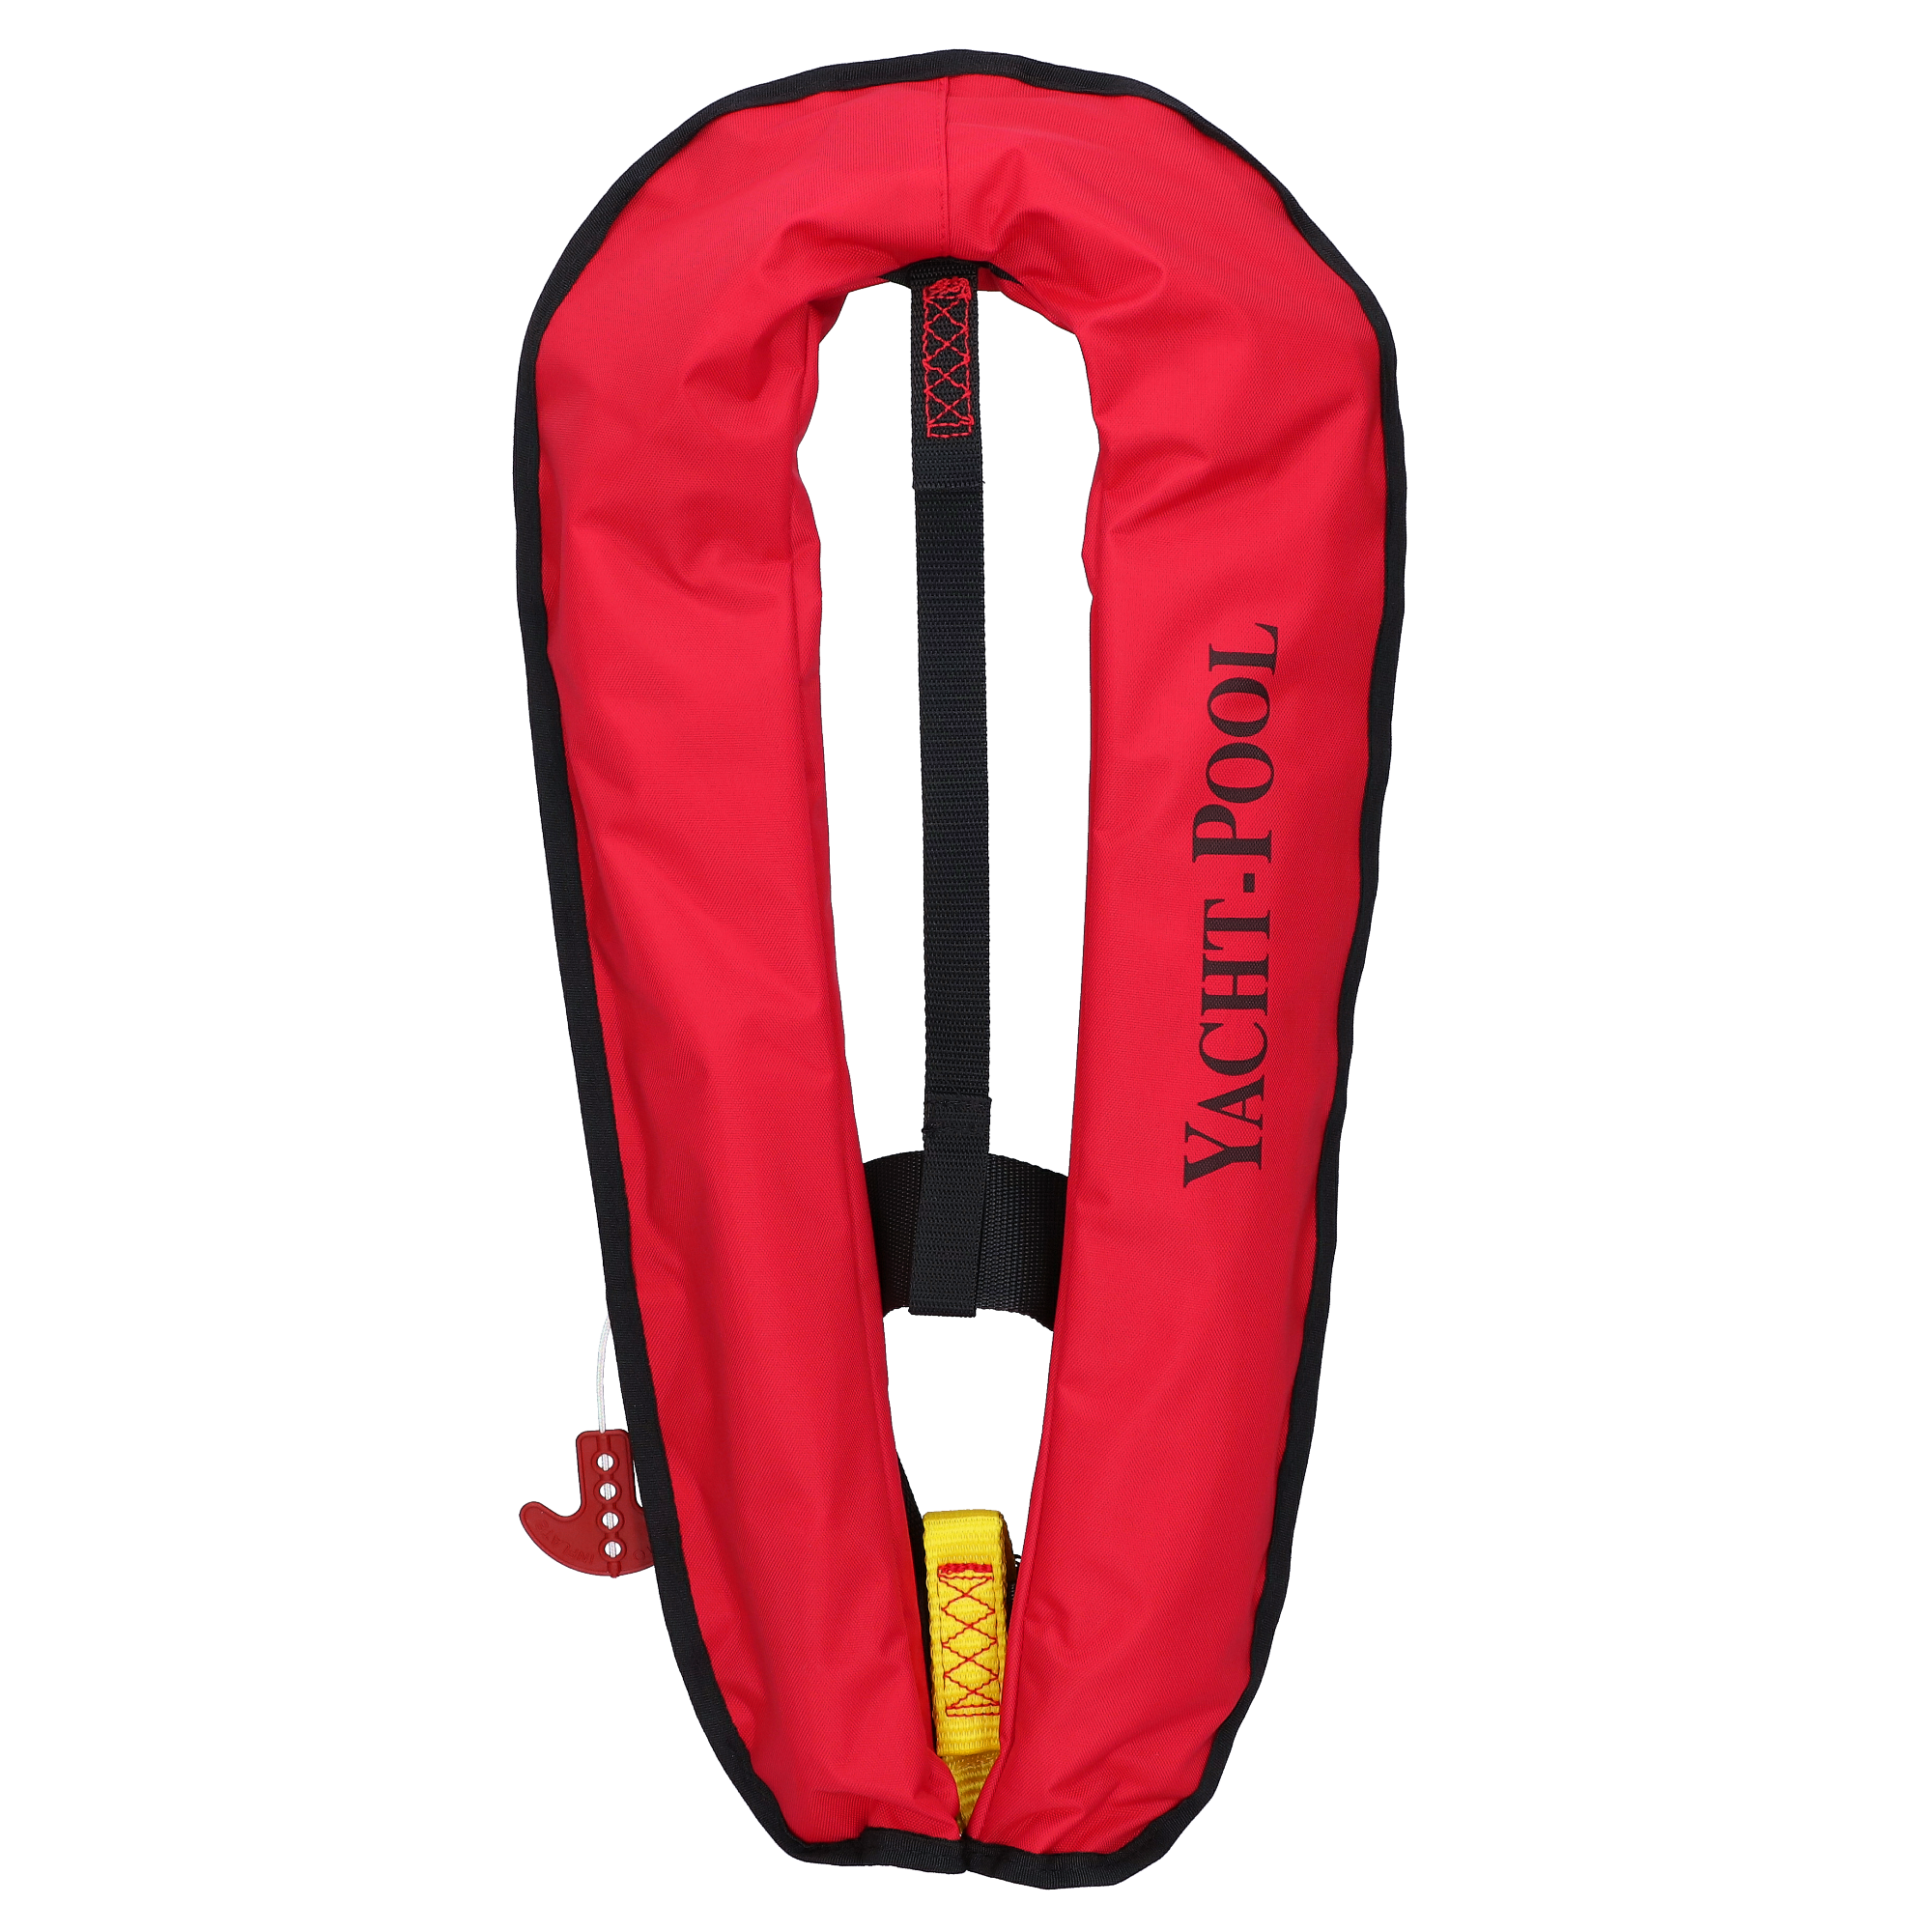 YACHT-POOL fully automatic life jacket 170 N